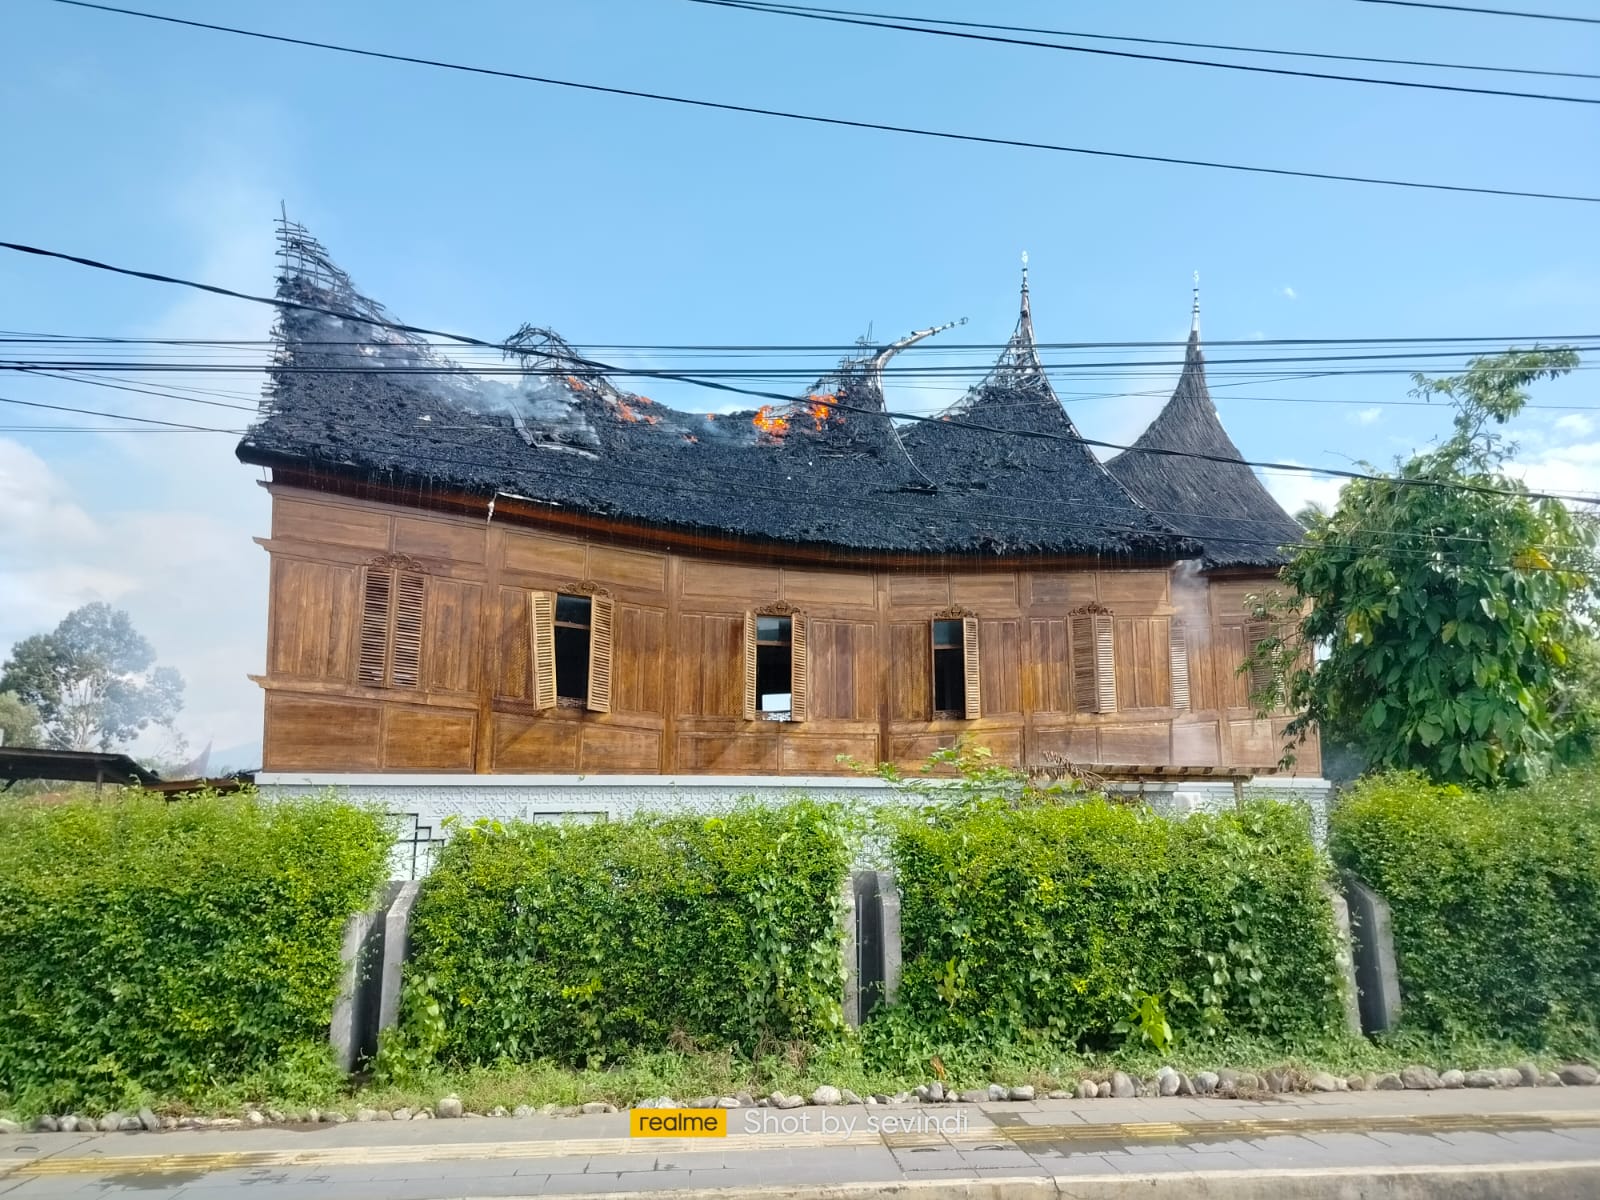 Rumah Gadang ‘Richmond’ Terbakar di Payakumbuh, Kerugian Capai Rp300 Juta